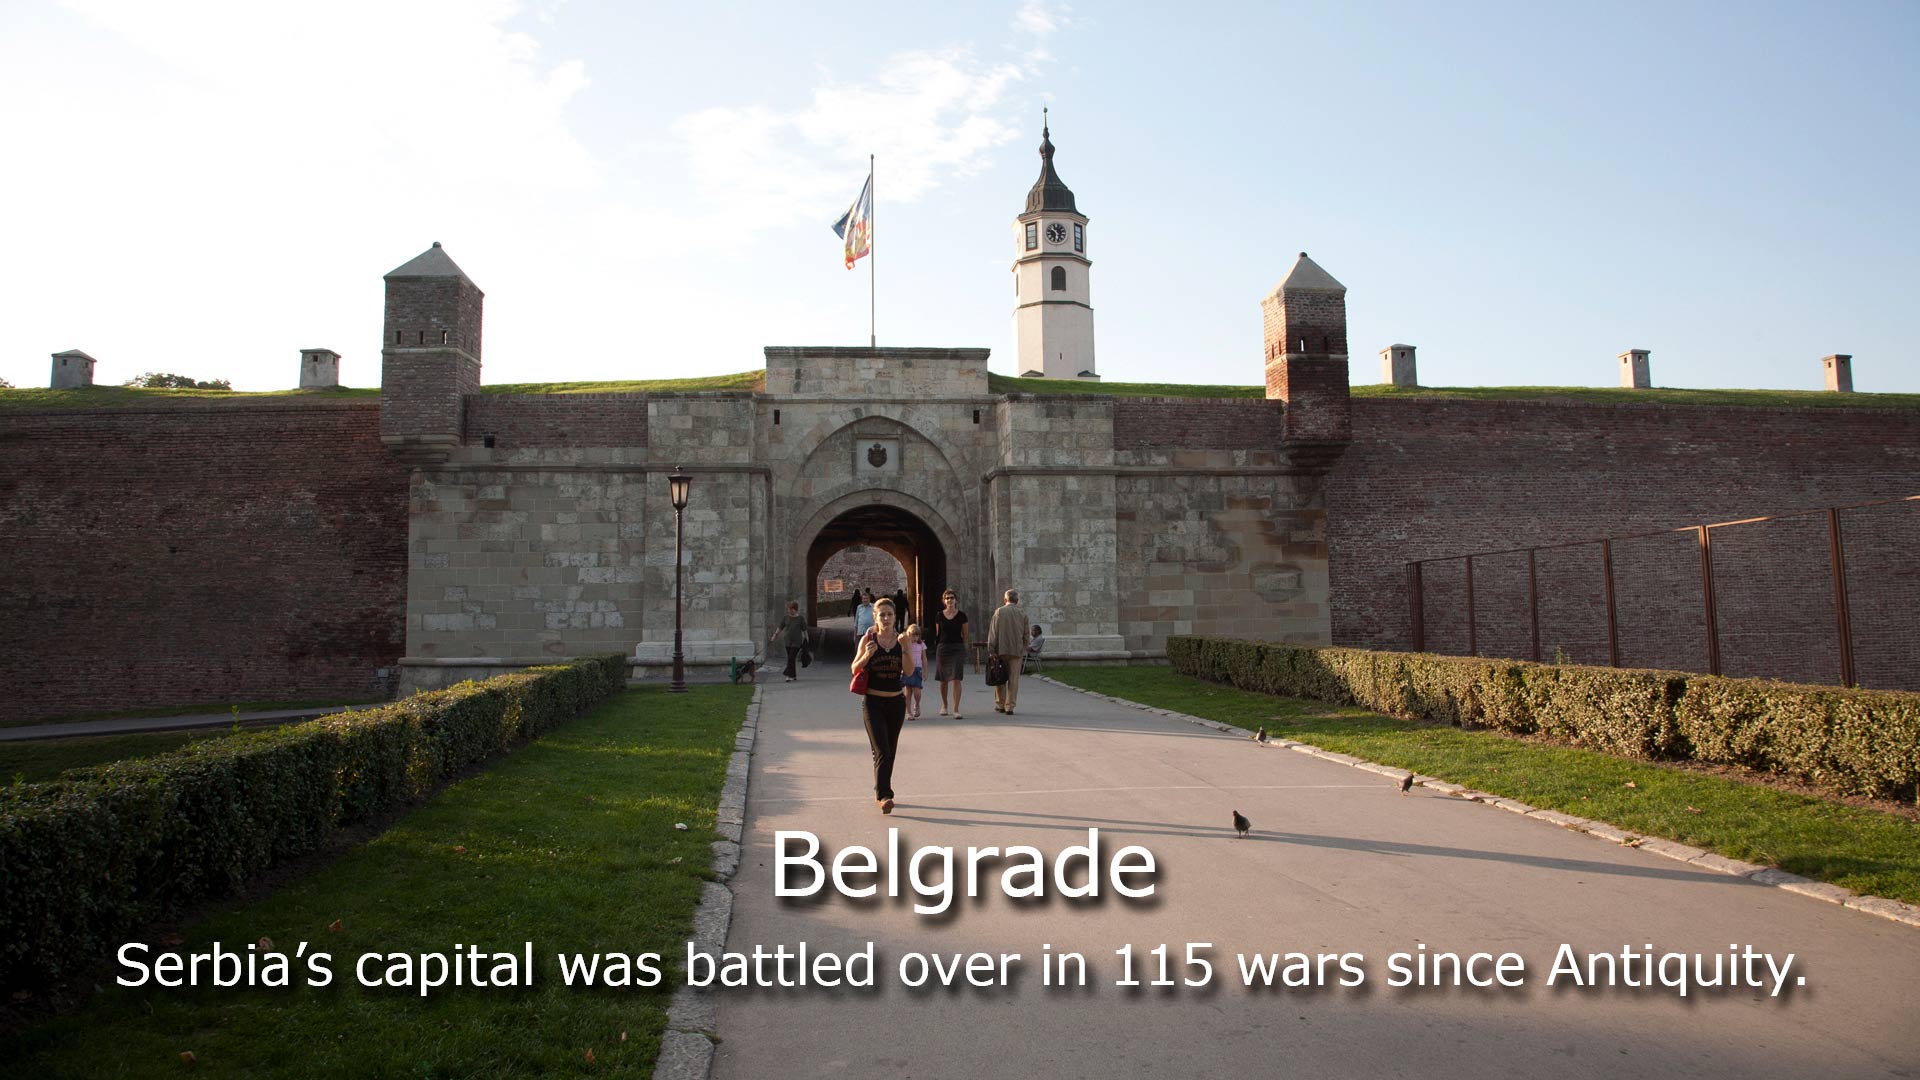 Belgrade - Serbia's capital was battled over in 115 wars since Antiquity